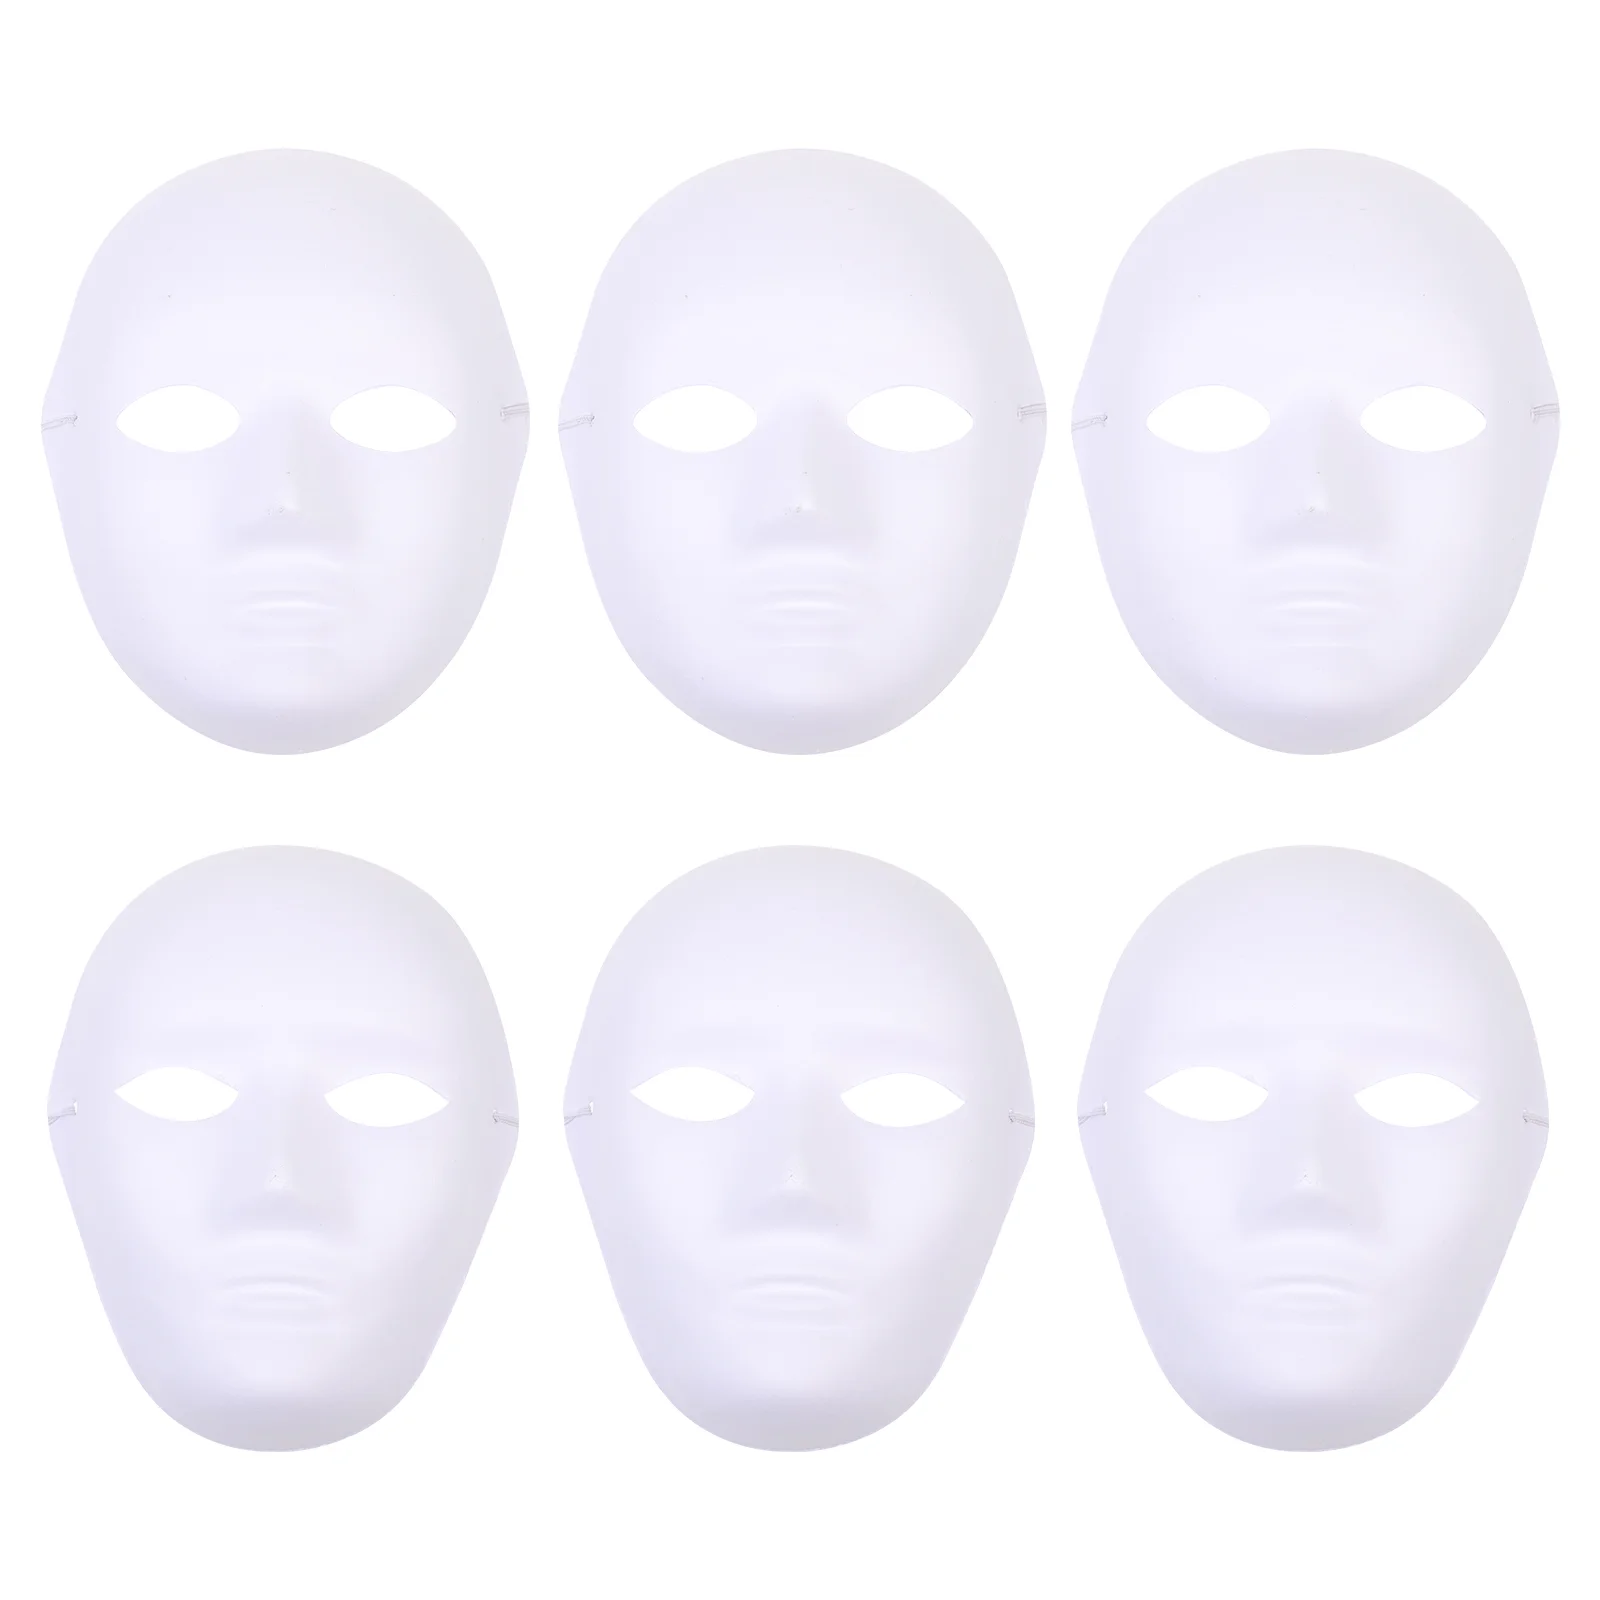 

6 Pcs Blank Mask Hallowen Paintable Masquerade Supplies Paper Child DIY Masks White